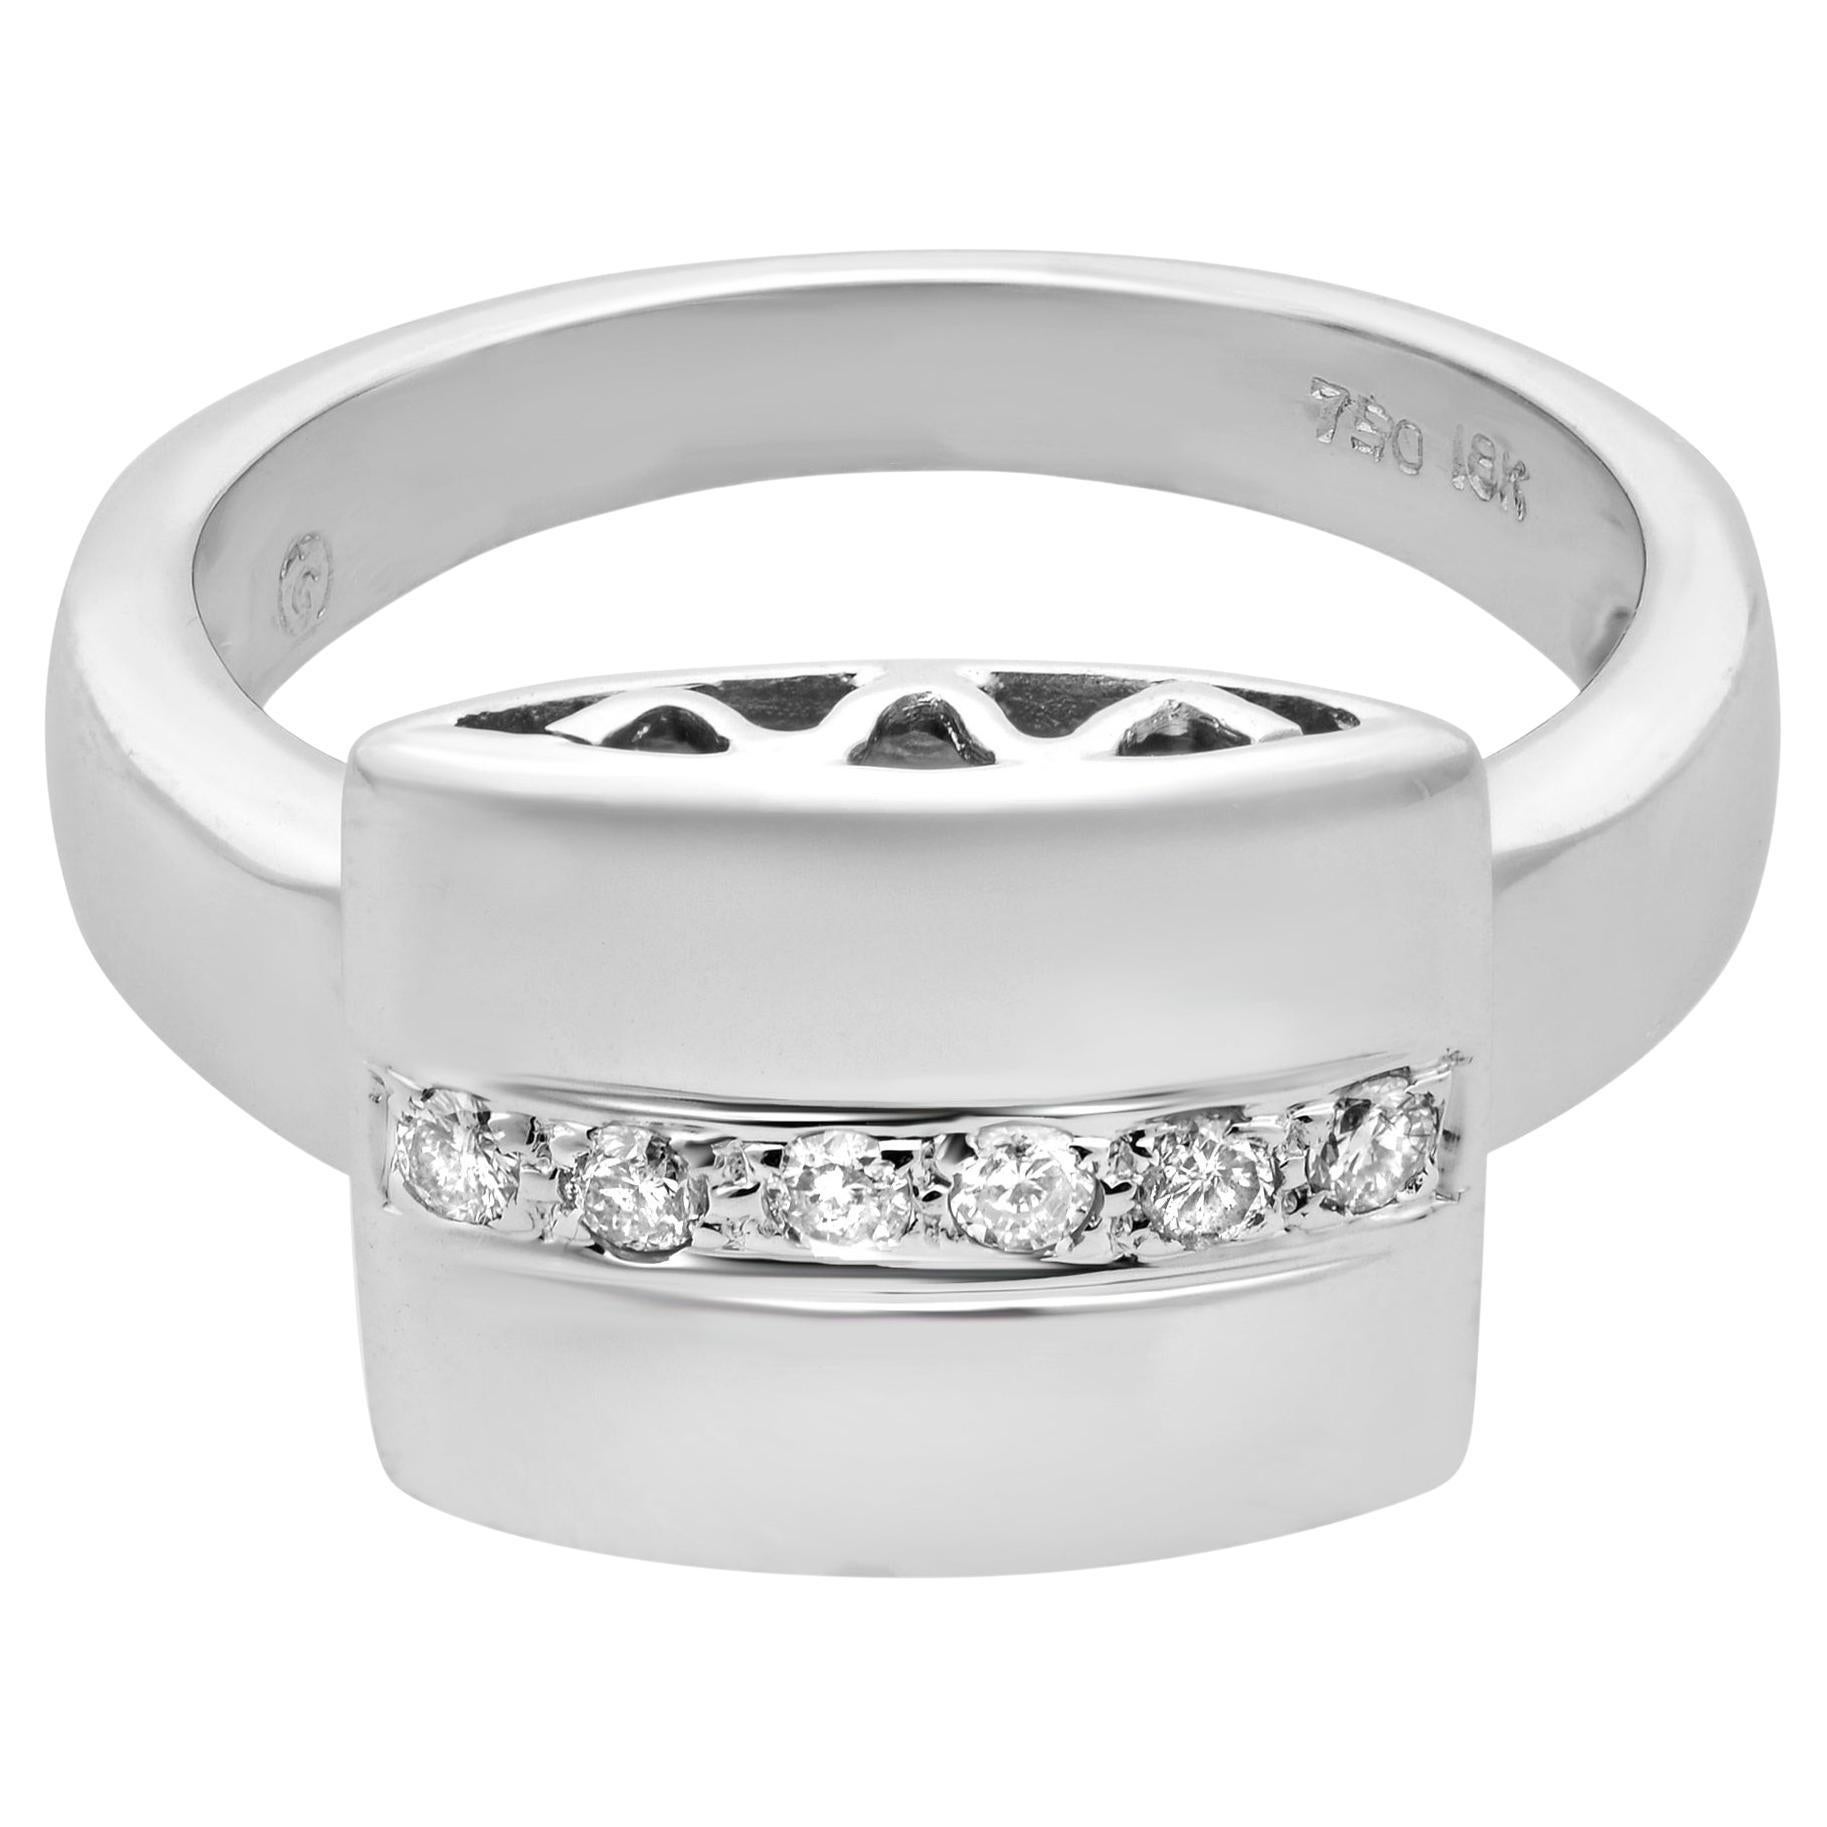 Rachel Koen 0.10Cttw Round Cut Diamond Ring 18K White Gold Size 6.75 For Sale